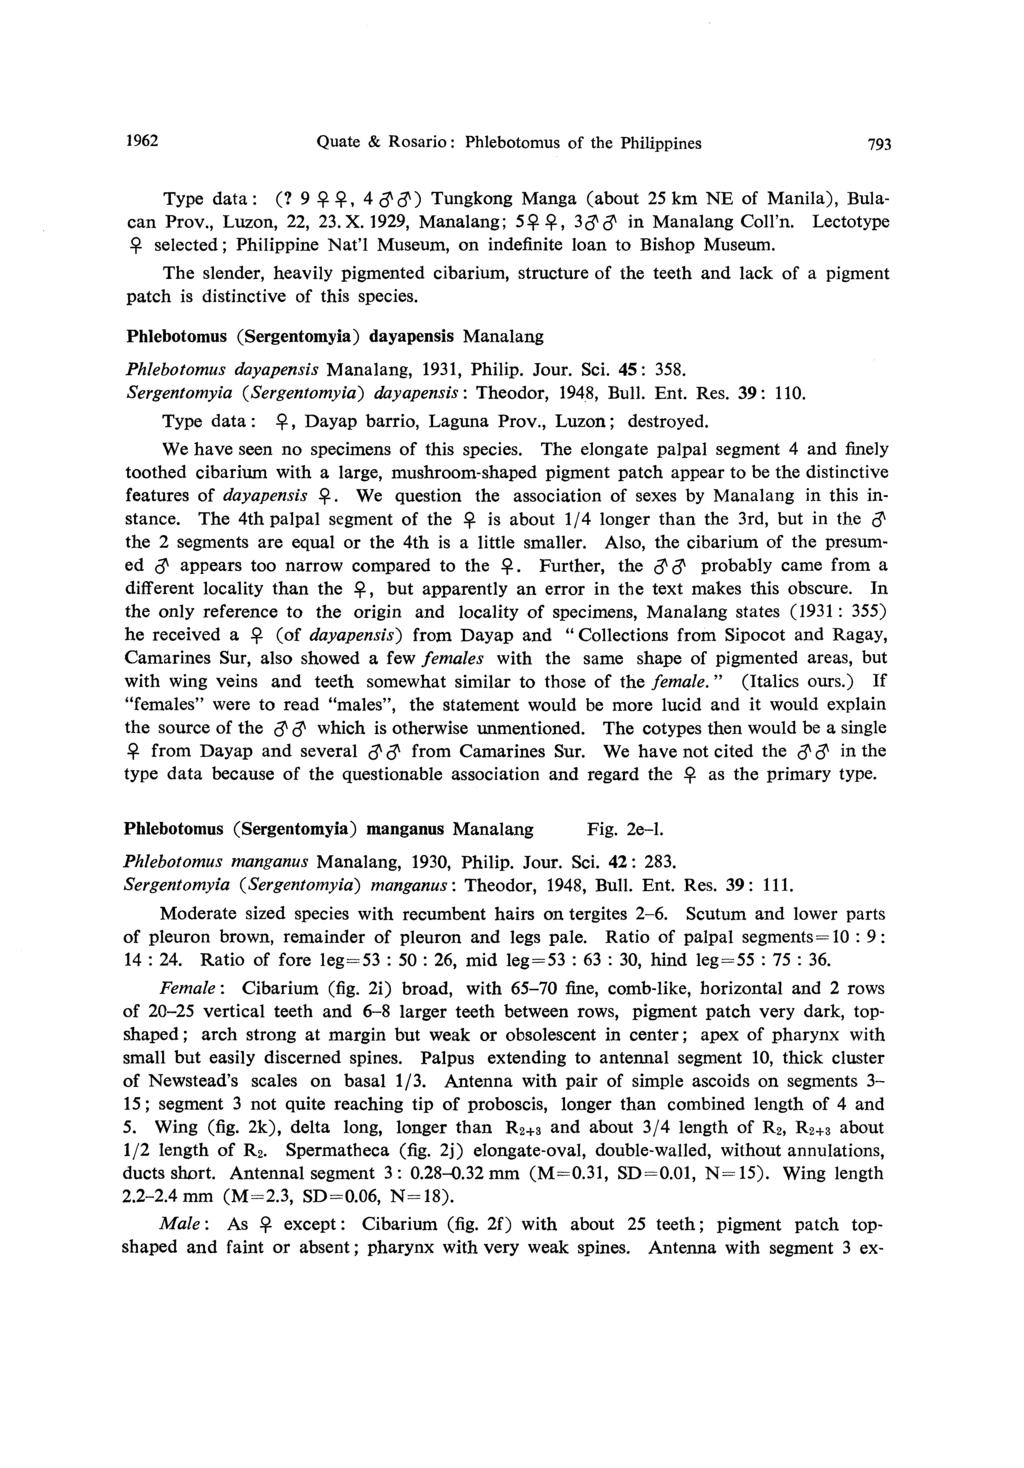 1962 Quate & Rosario: Phlebotomus of the Philippines 793 Type data: (? 9 - -, 4 33) Tungkong Manga (about 25 km NE of Manila), Bulacan Prov., Luzon, 22, 23.X.